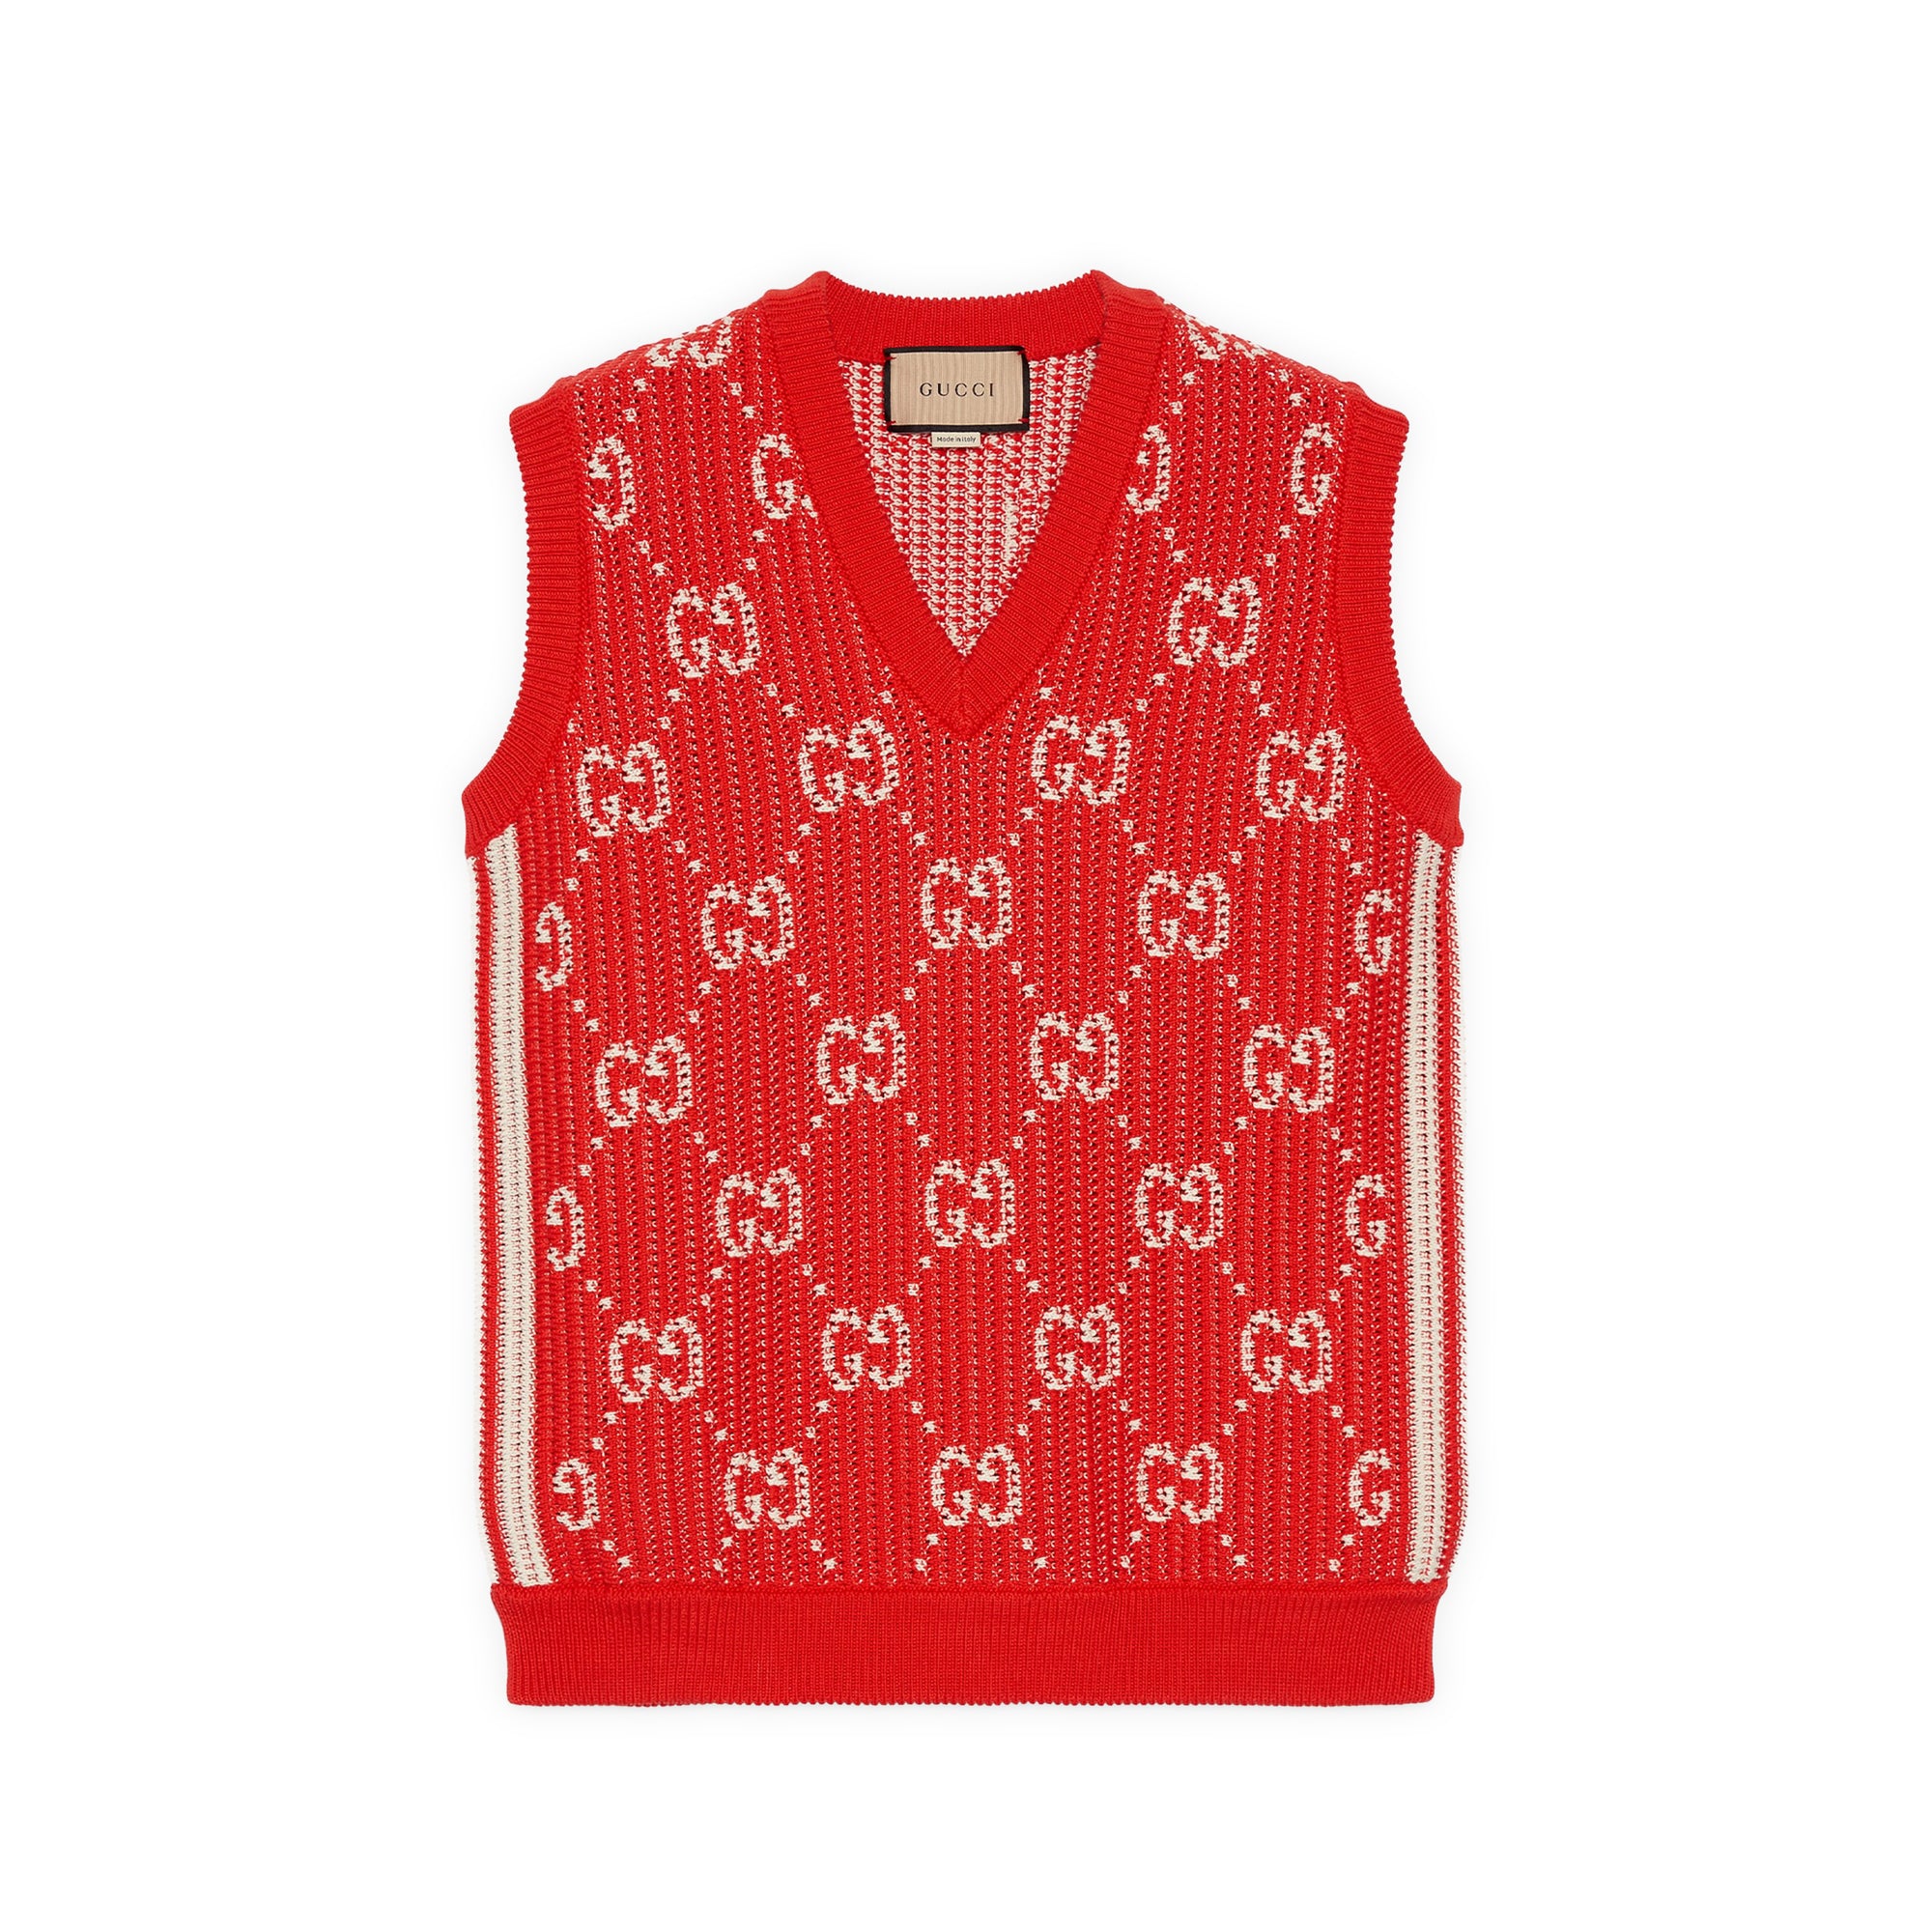 Gucci - Men’s GG Knit Cotton Jacquard Vest - (Red) view 1